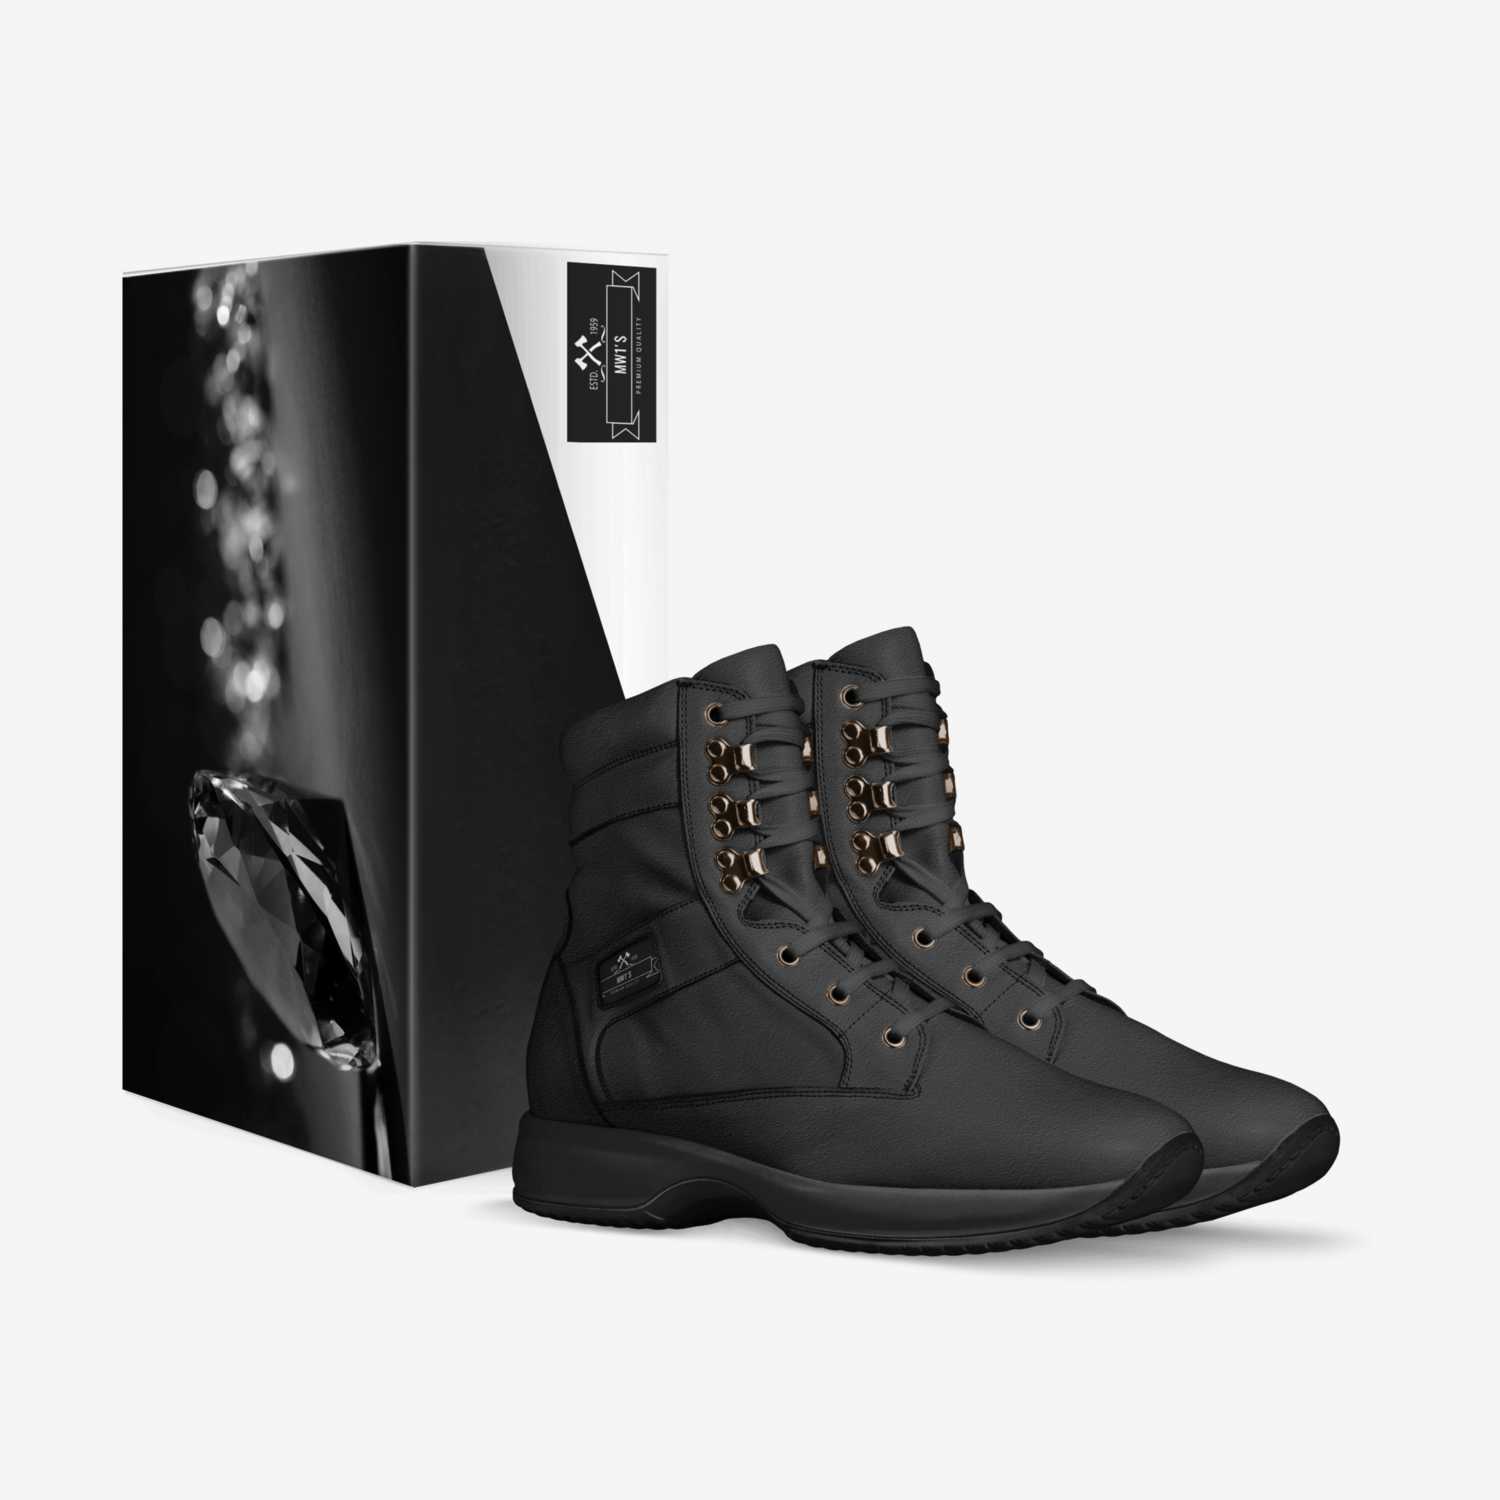 idkk custom made in Italy shoes by Michael Washington | Box view